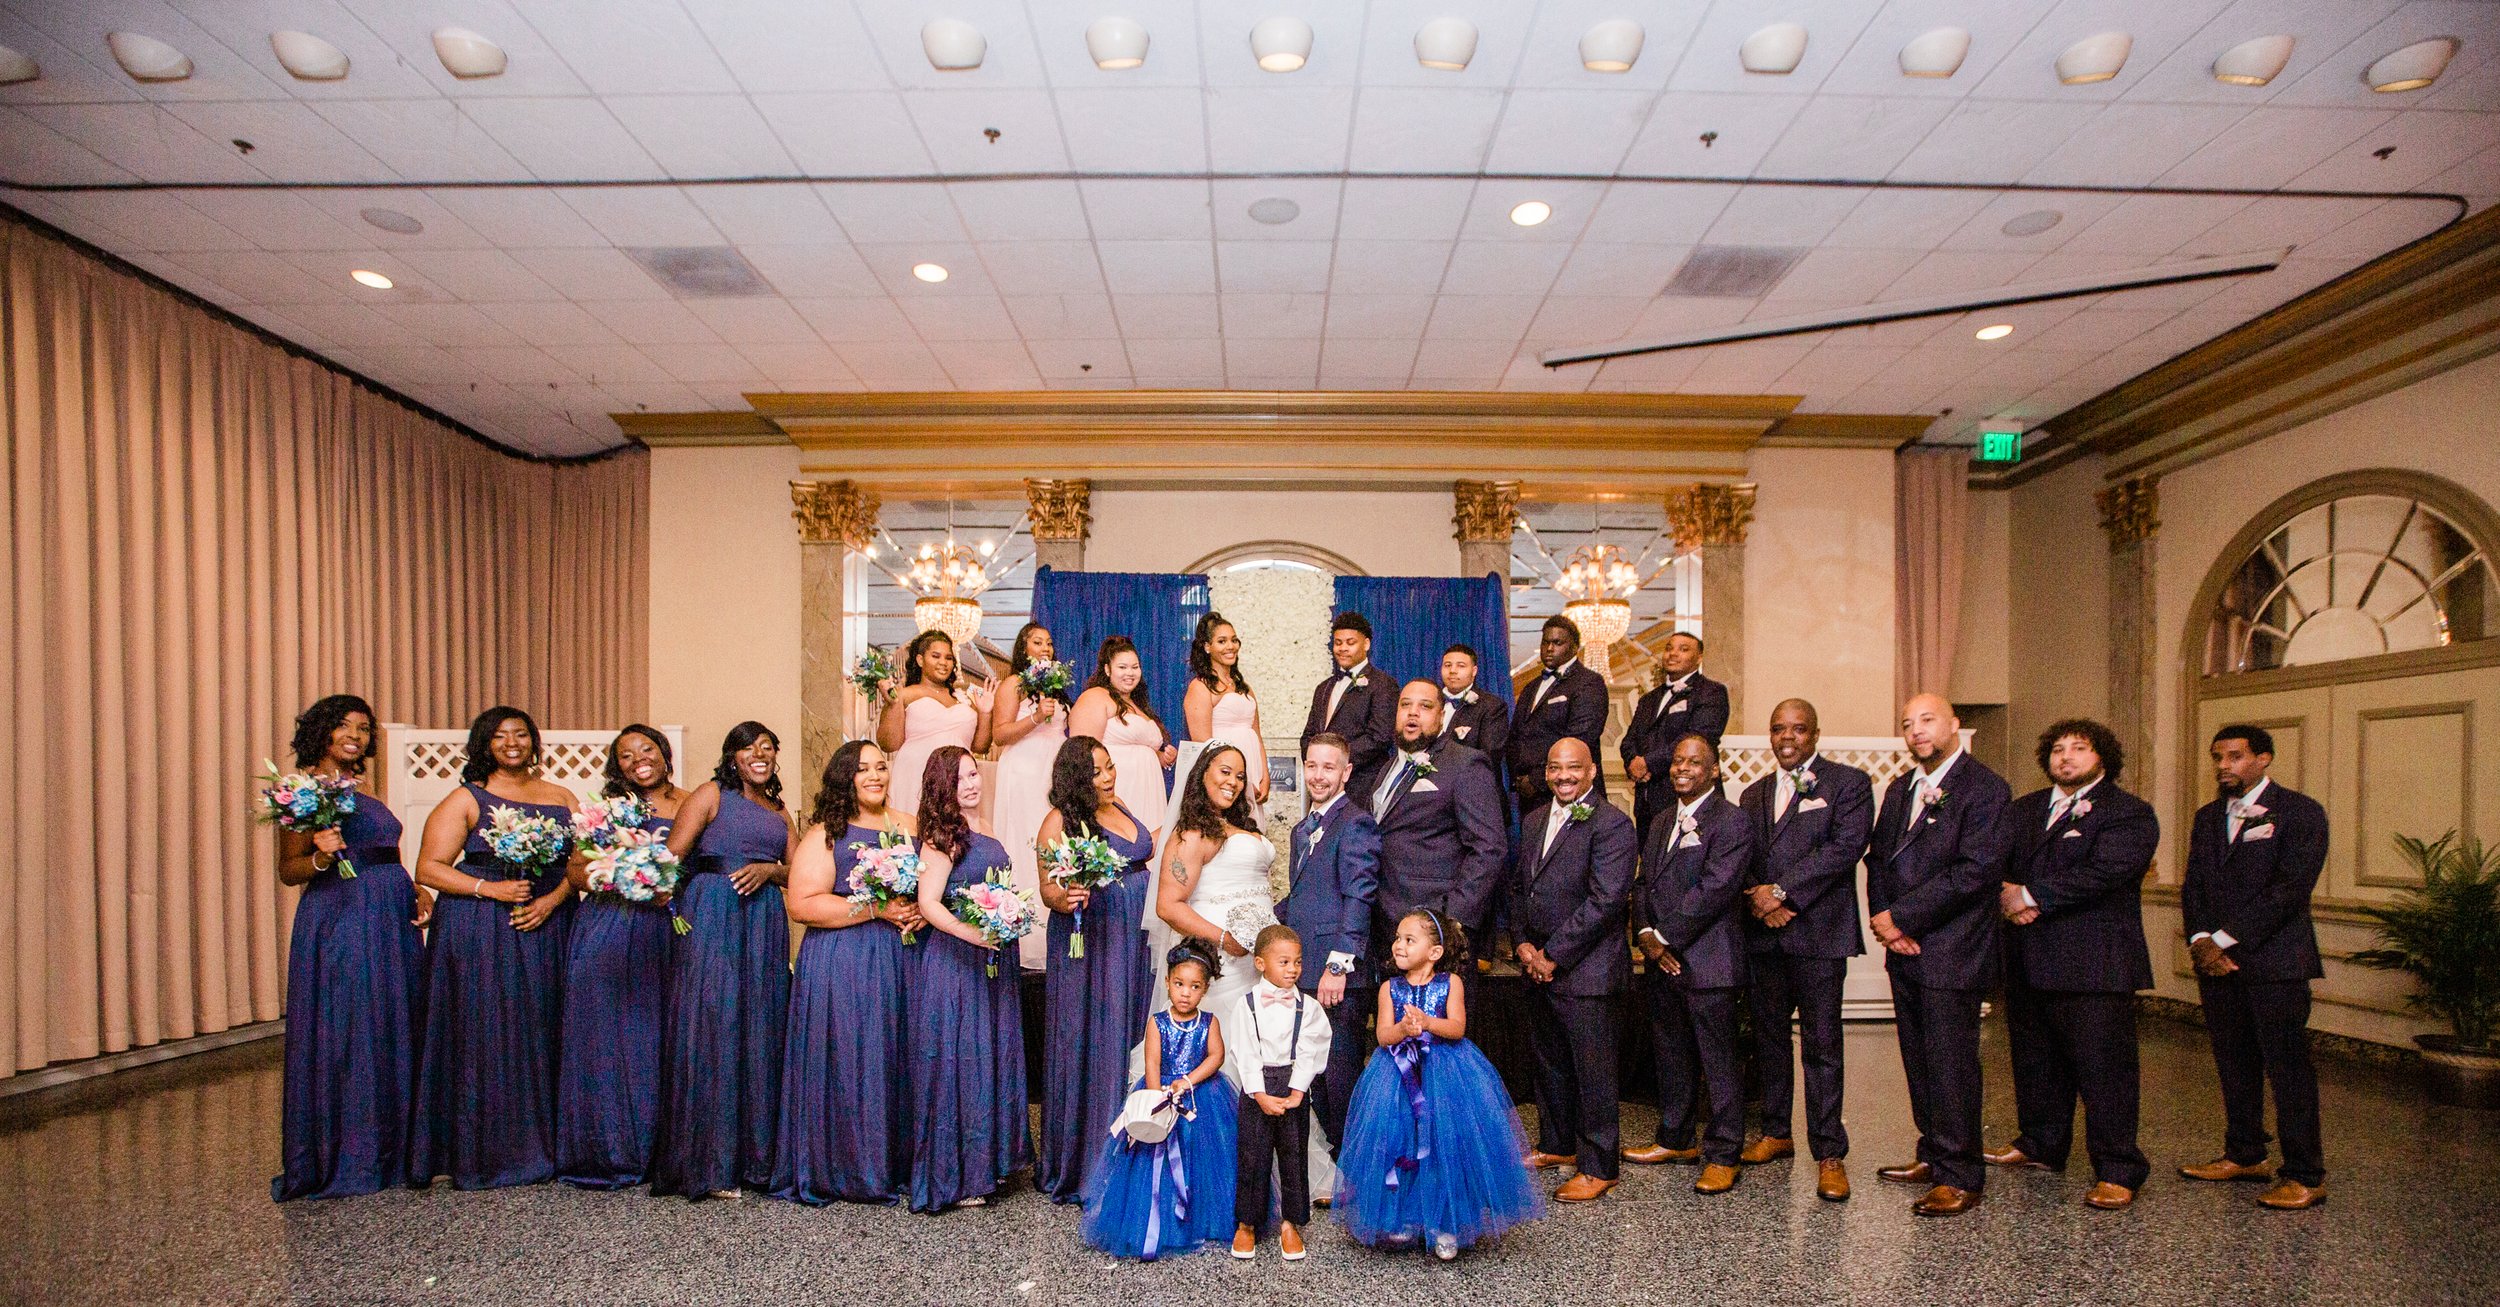 Best Wedding at Martins West Baltimore Inclusive Photographers Megapixels Media Photography-24.jpg